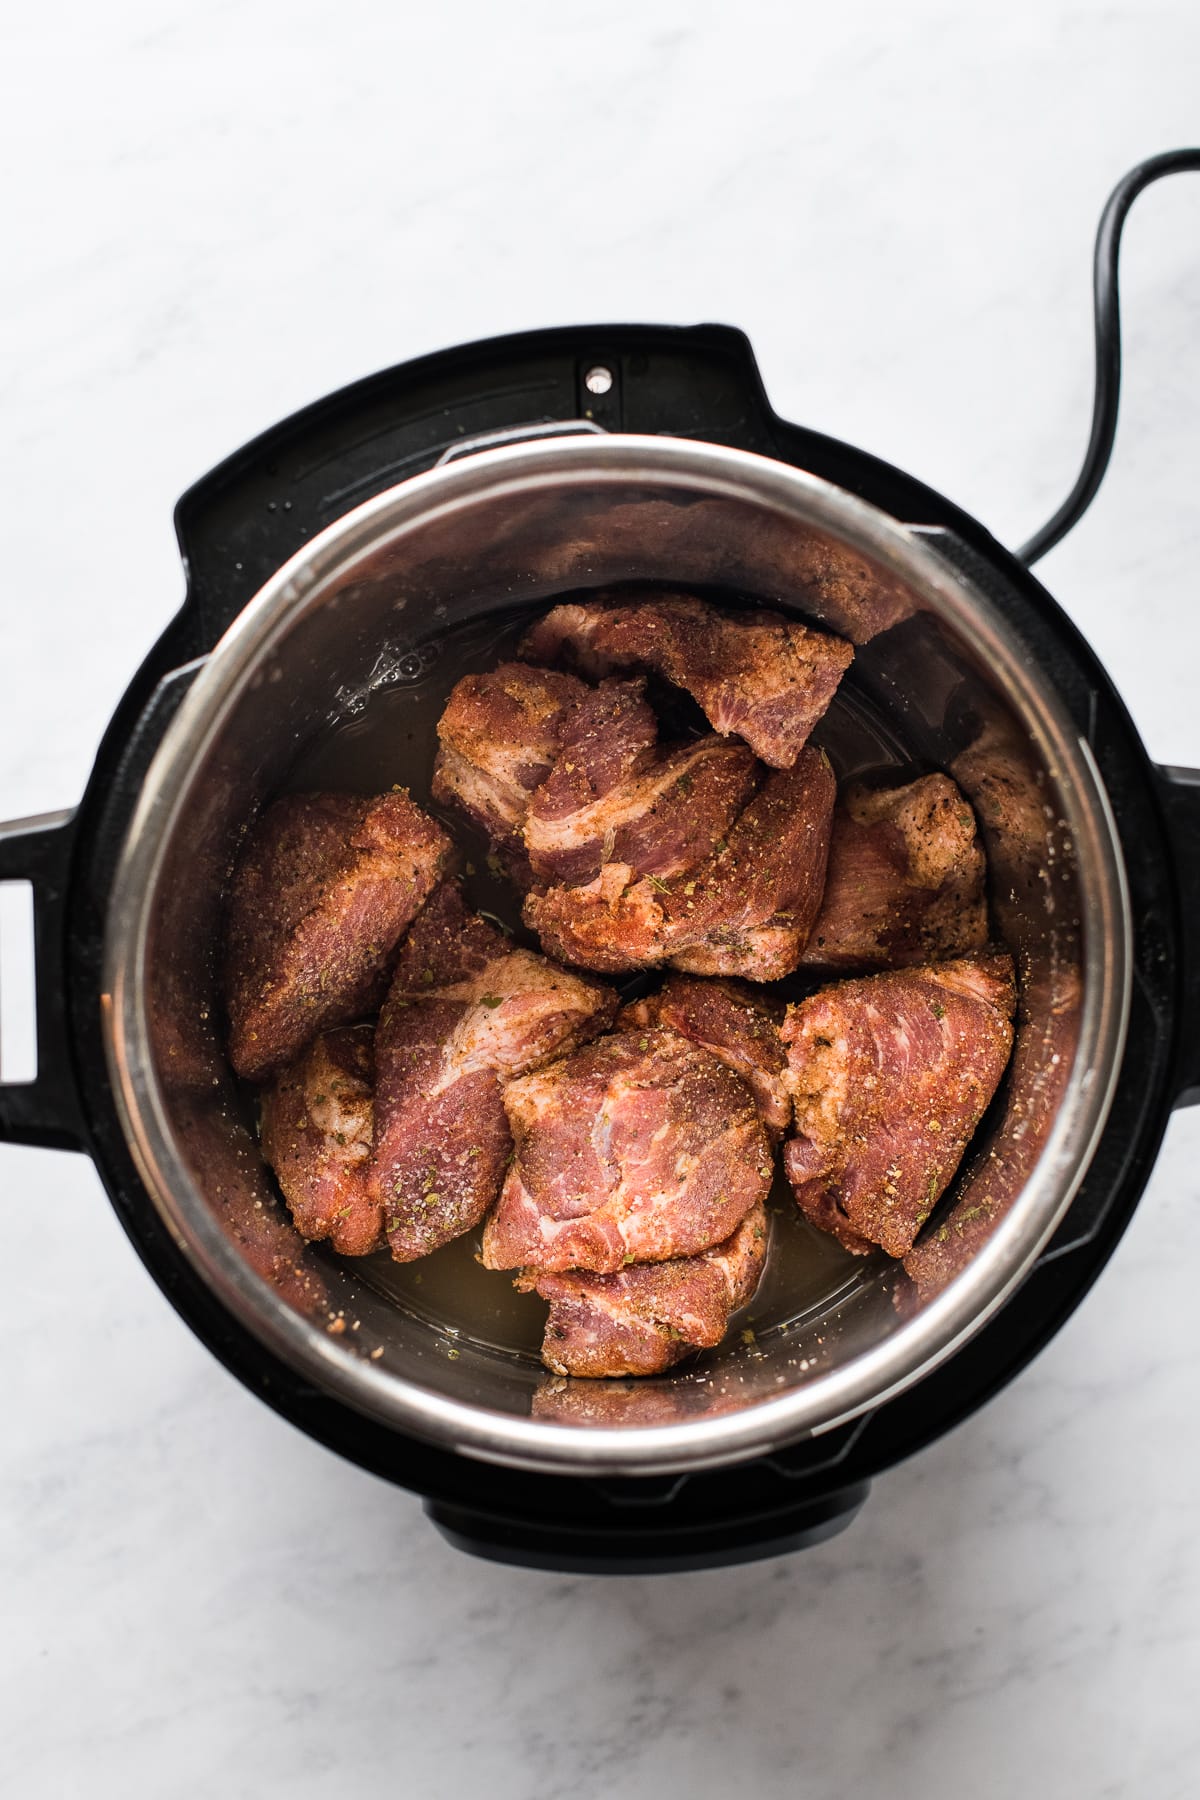 Seasoned chunks of pork shoulder in an Instant Pot pressure cooker.